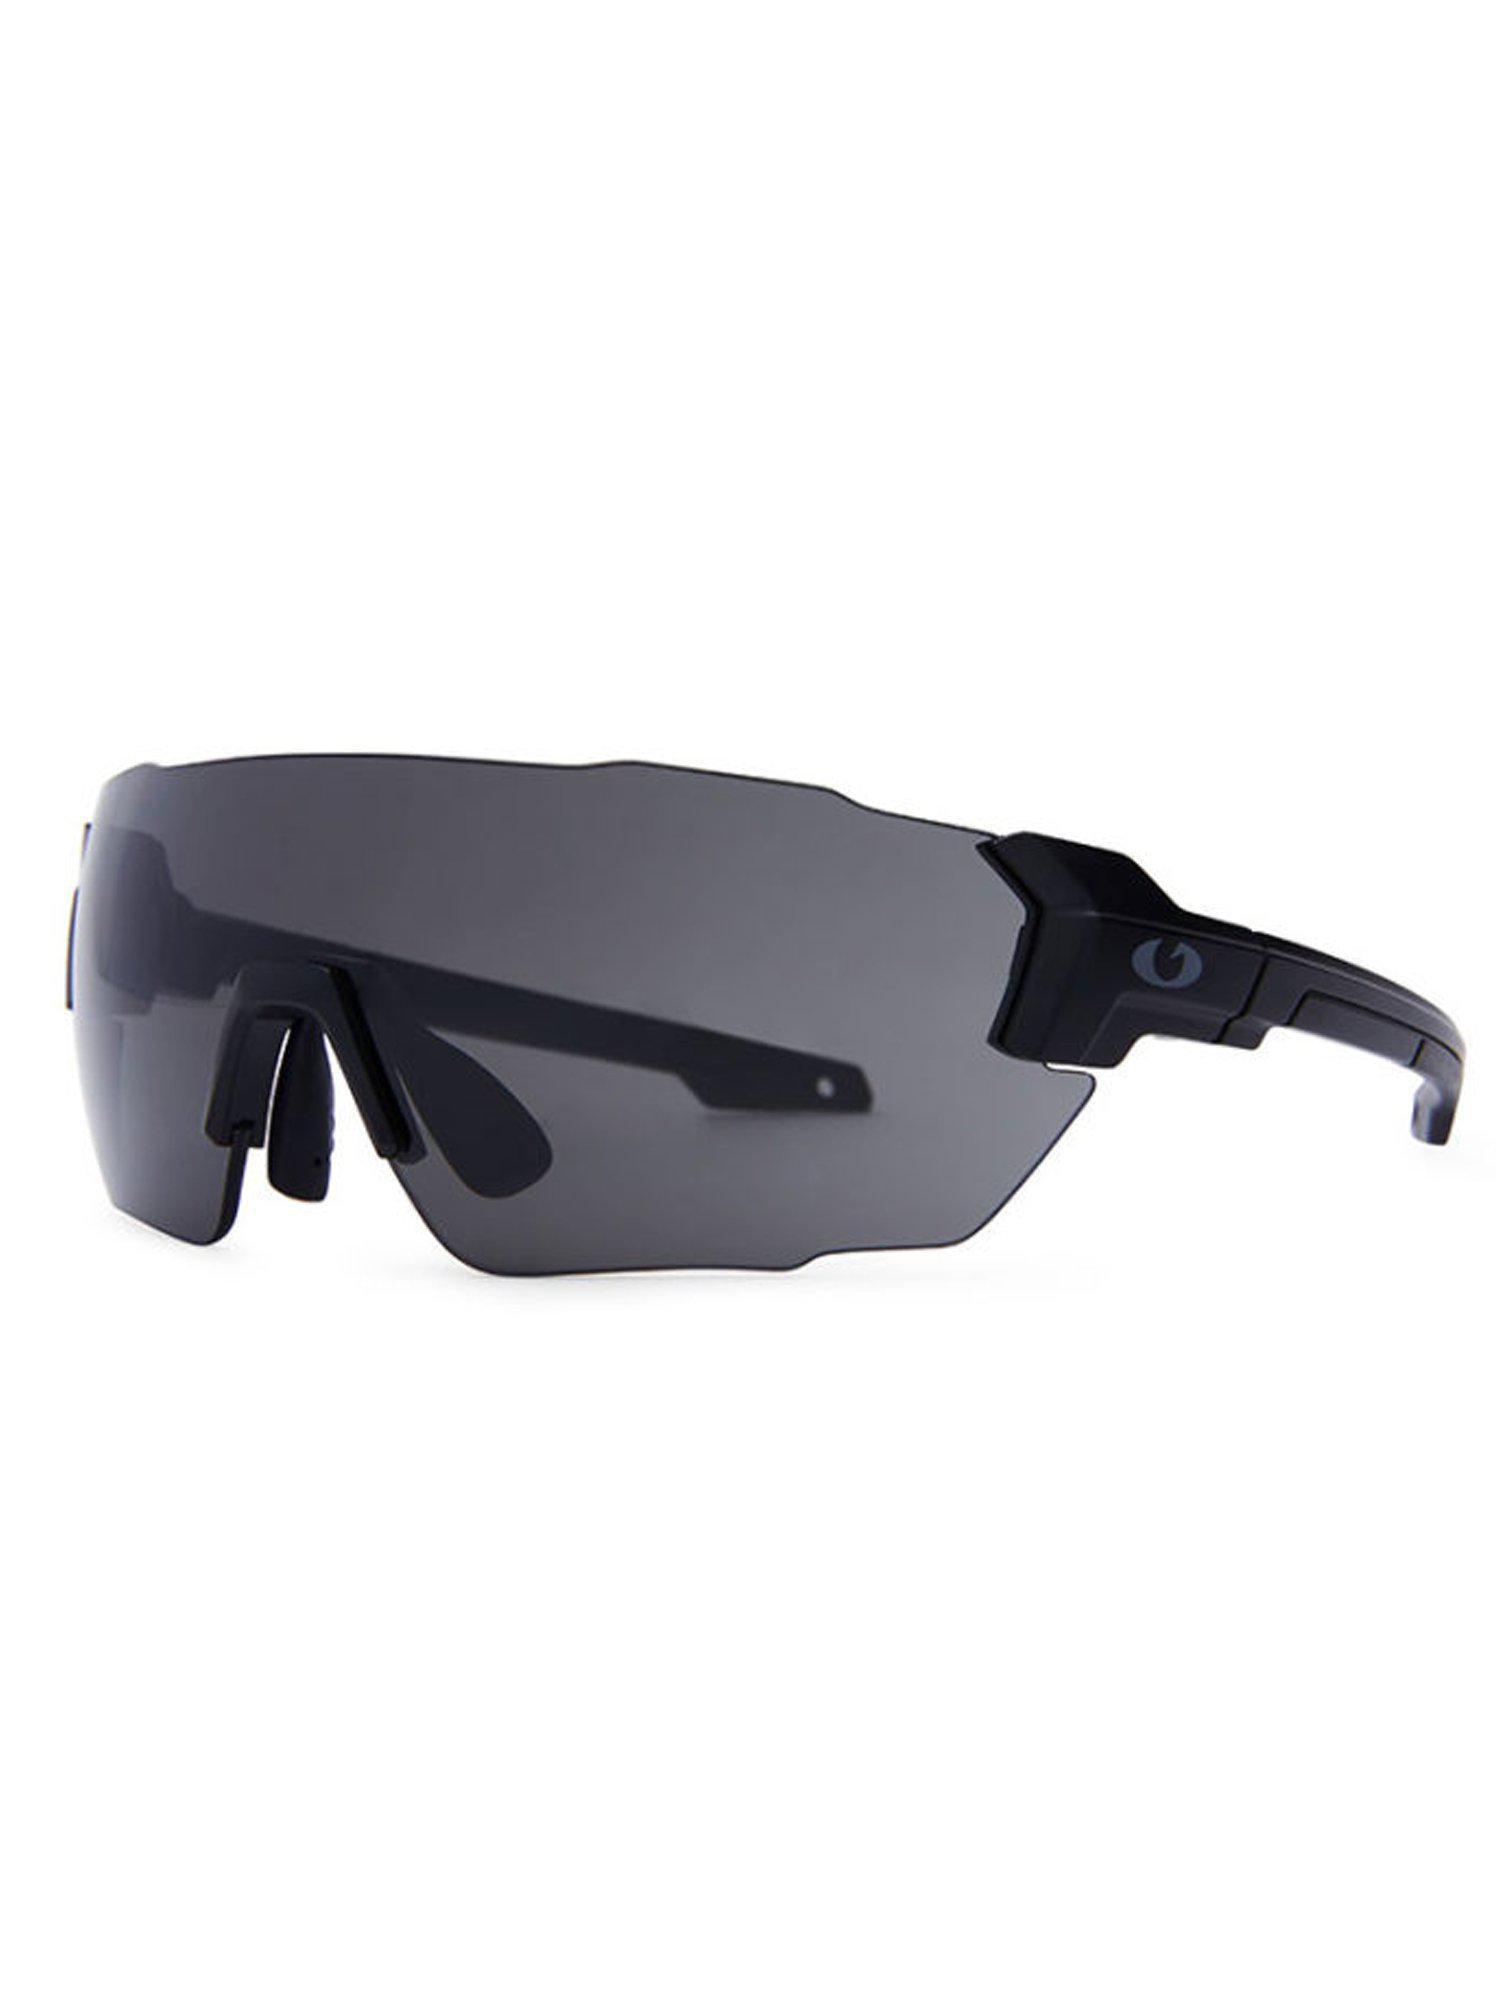 BluEye Tactical Velocity Eyewear - TacSource